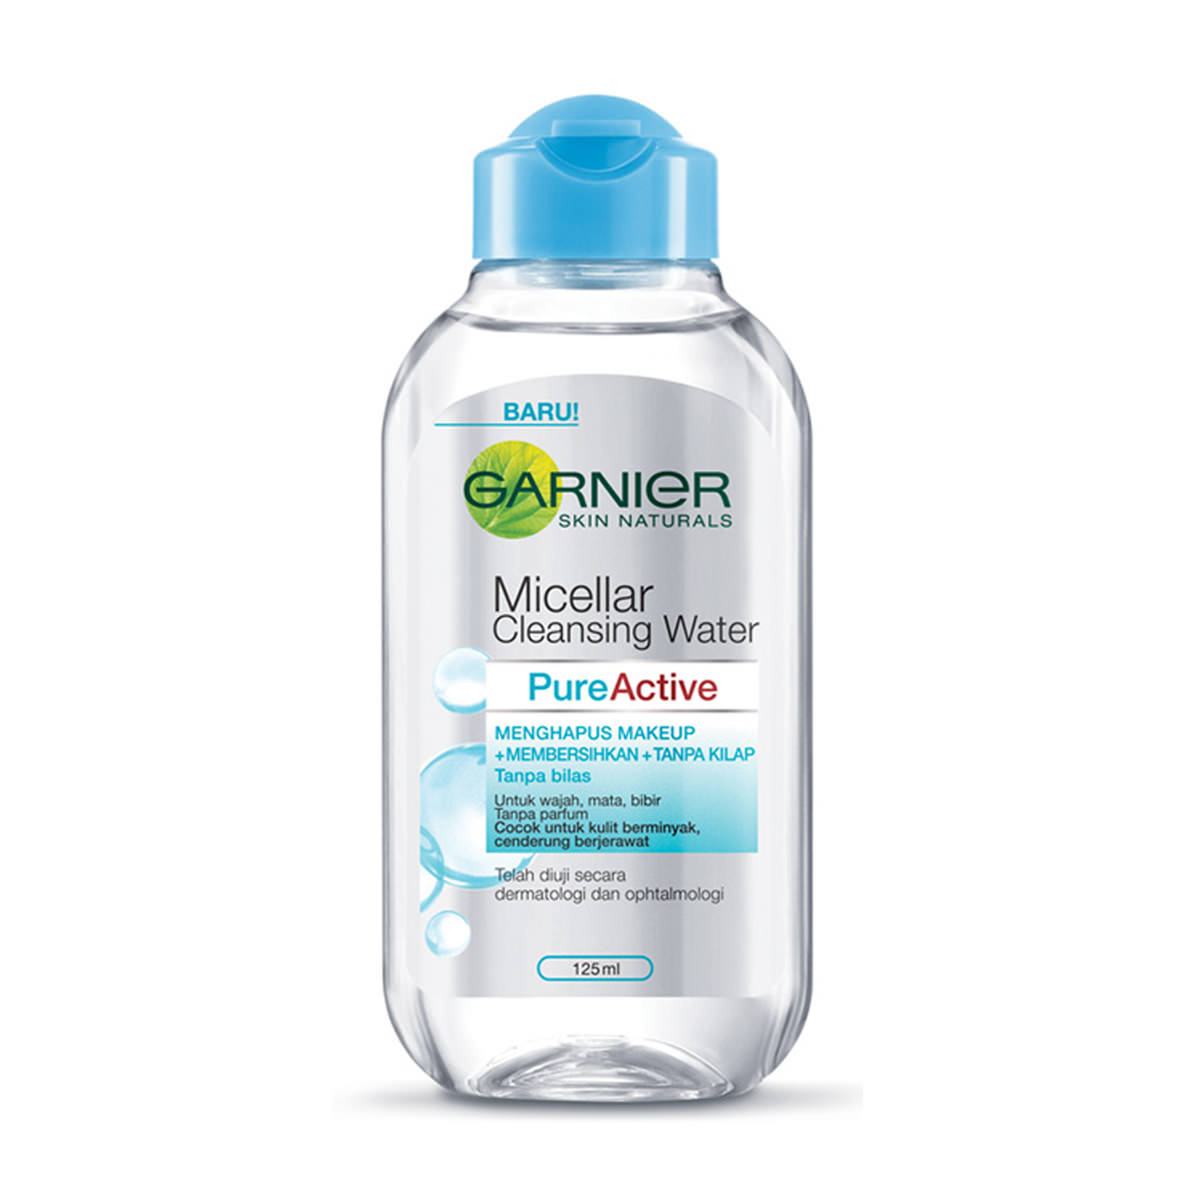 Garnier-Micellar-Cleansing-Water-Pure-Active-sfw